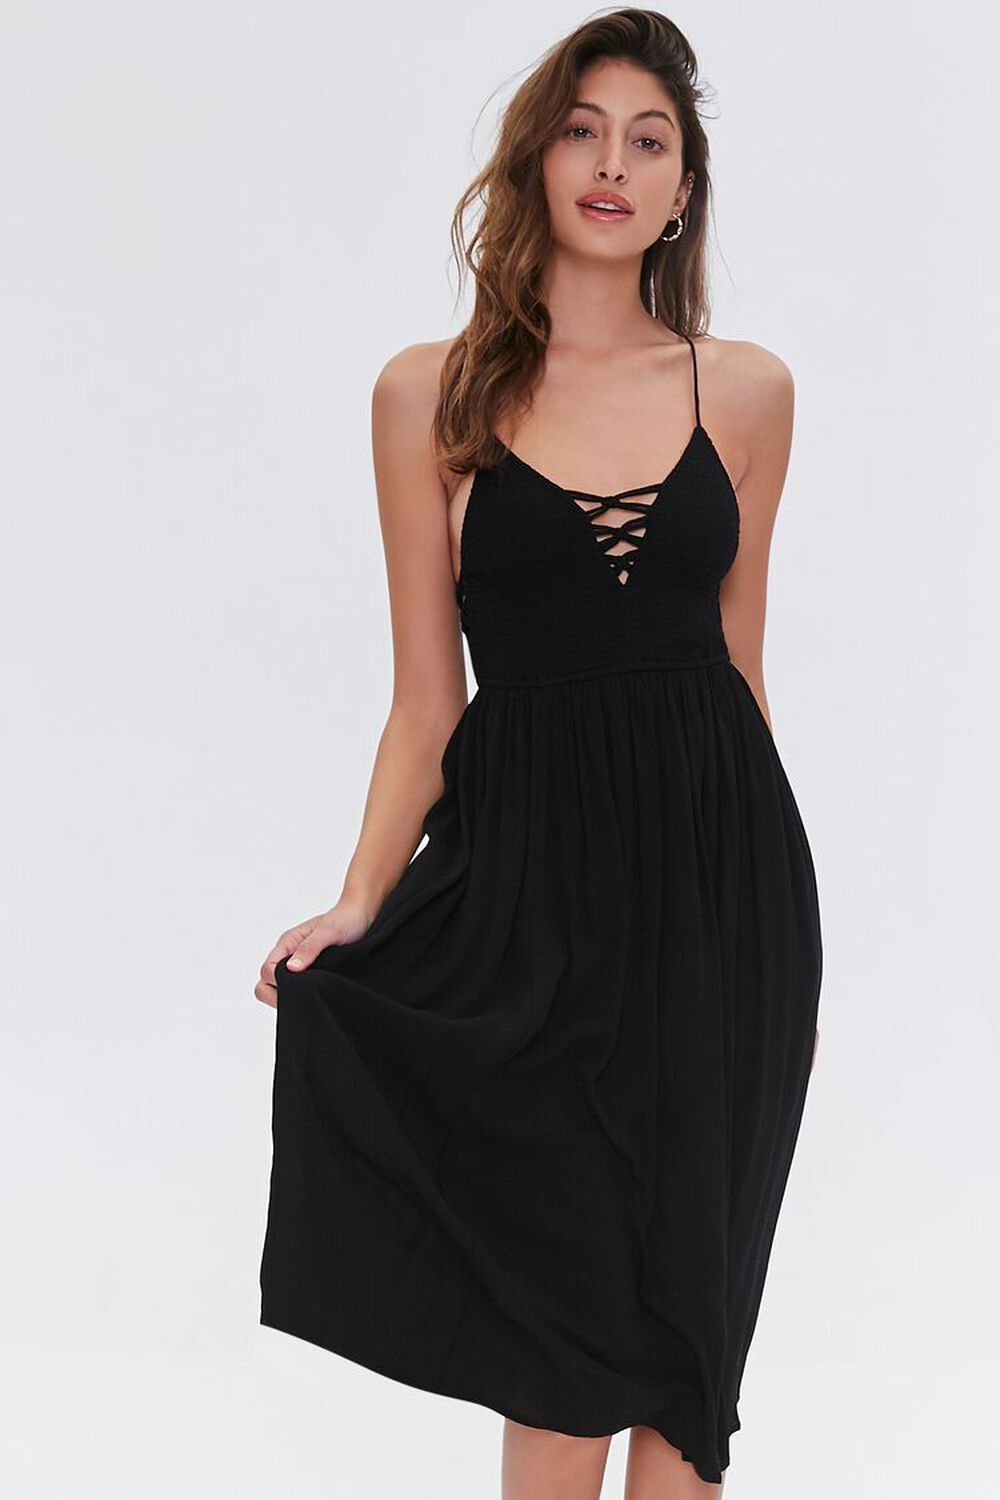 BLACK Lattice Cami Dress, image 1